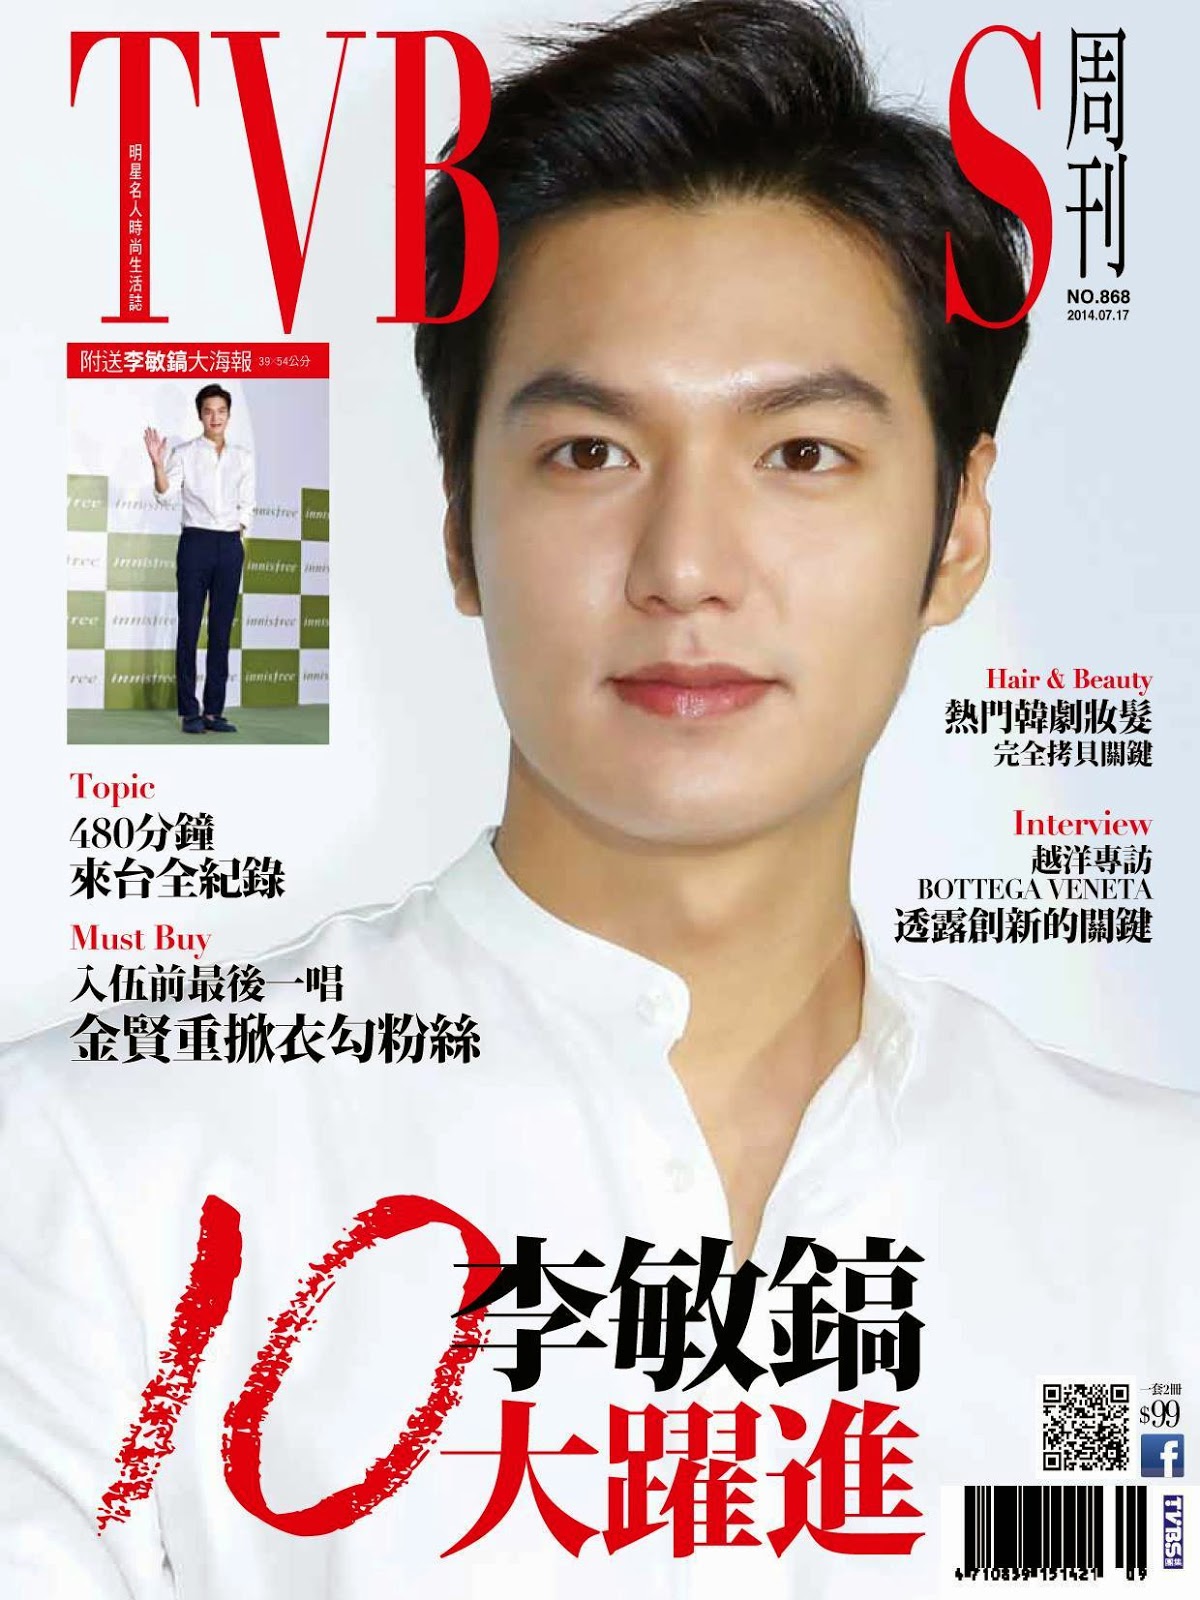 The Imaginary World of Monika: Lee Min Ho for TVBS周刊 Magazine Volume ...